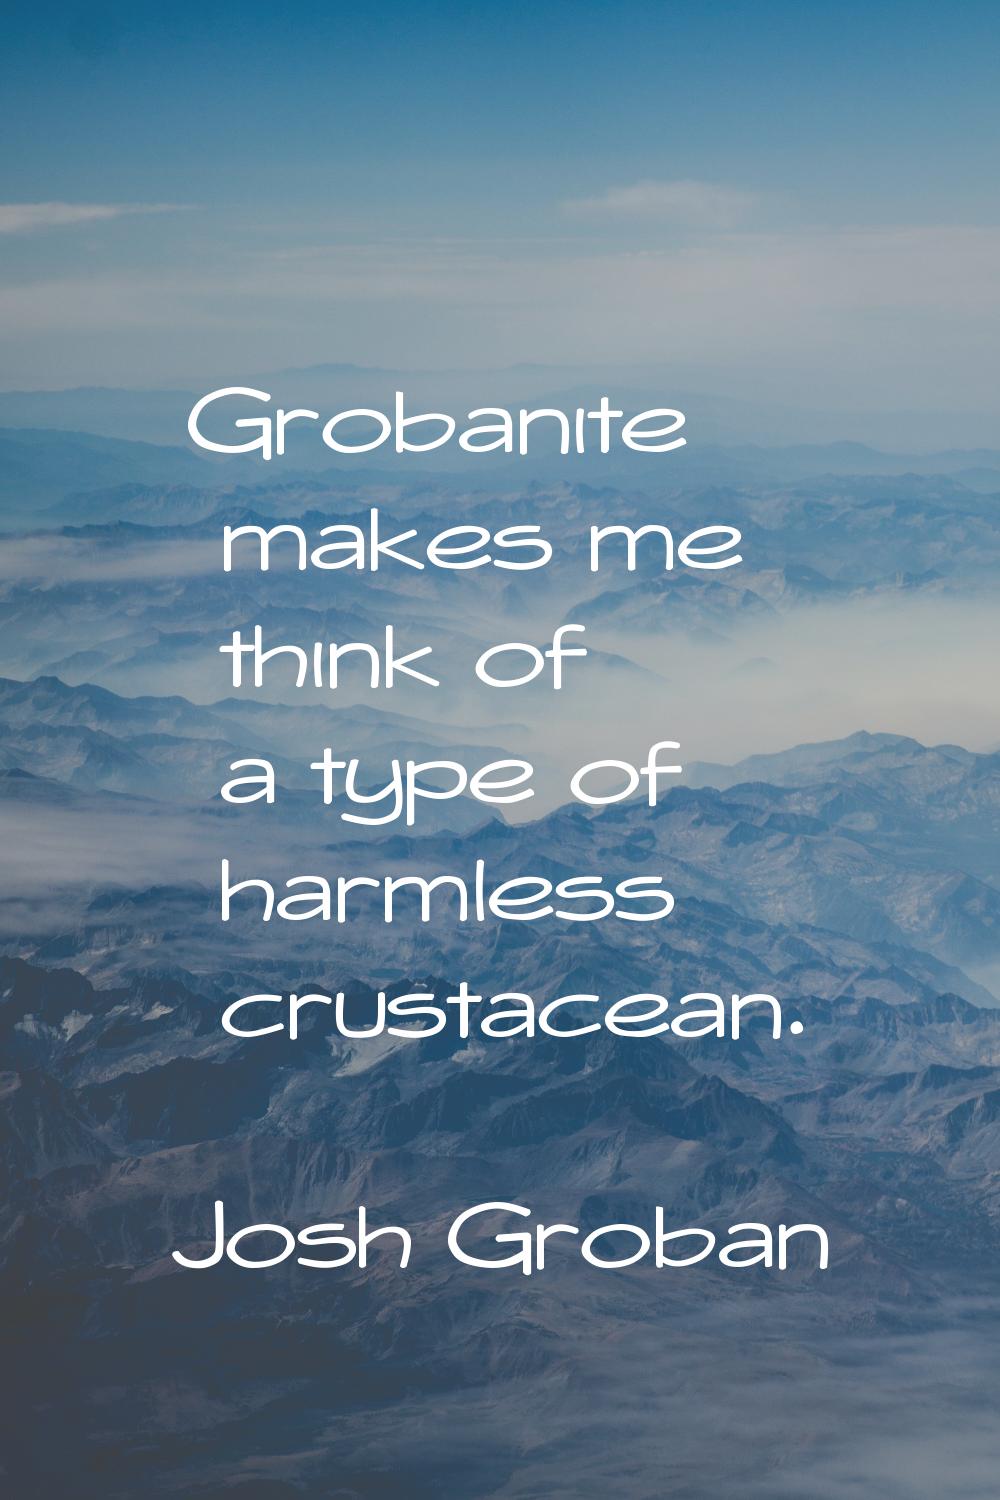 Grobanite makes me think of a type of harmless crustacean.